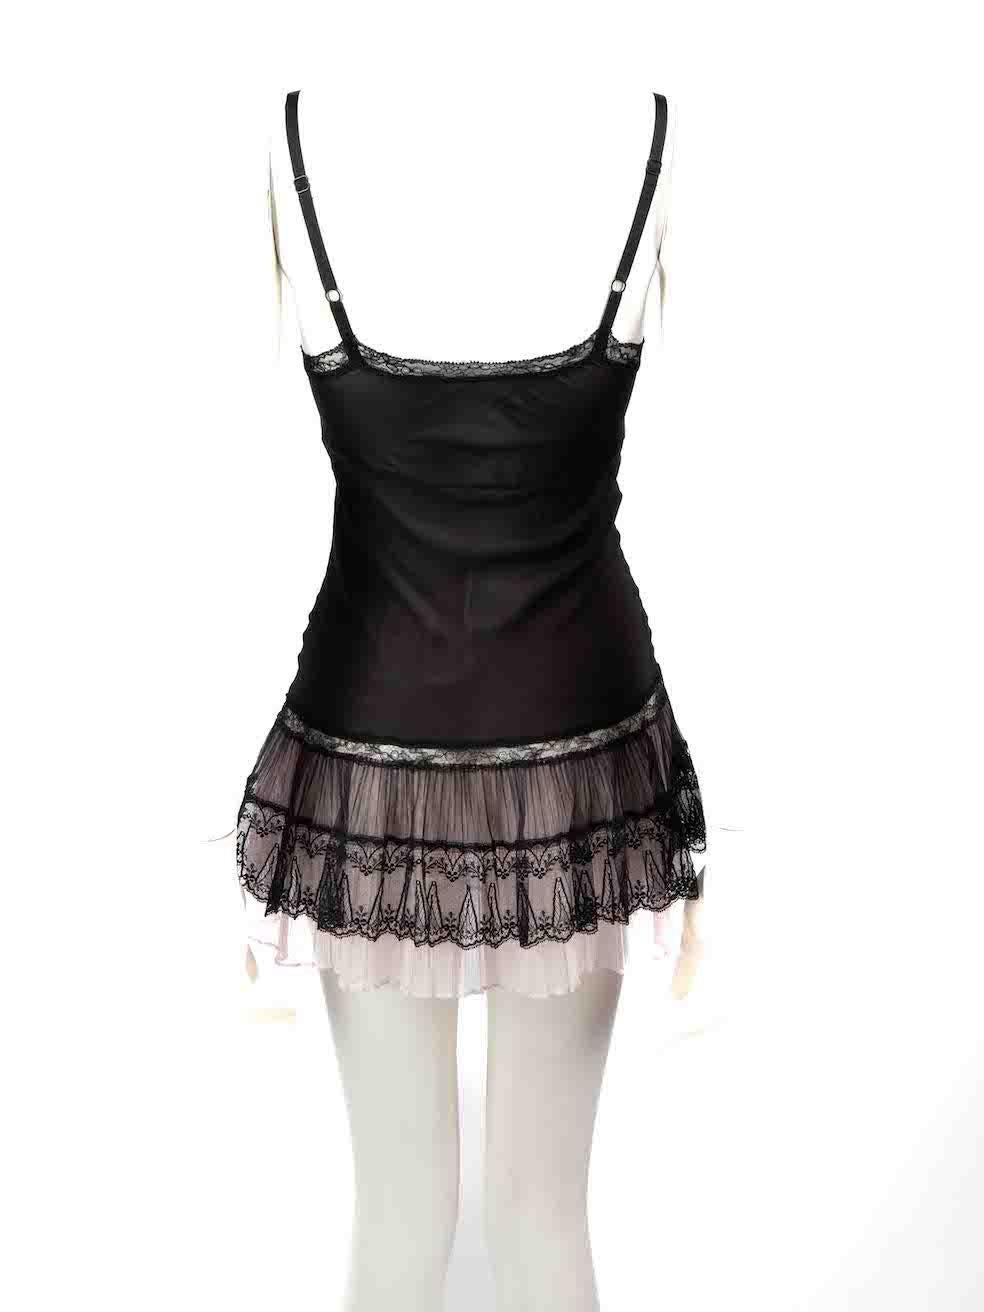 Agent Provocateur Black Lace Trim Slip Dress Size S In Excellent Condition For Sale In London, GB